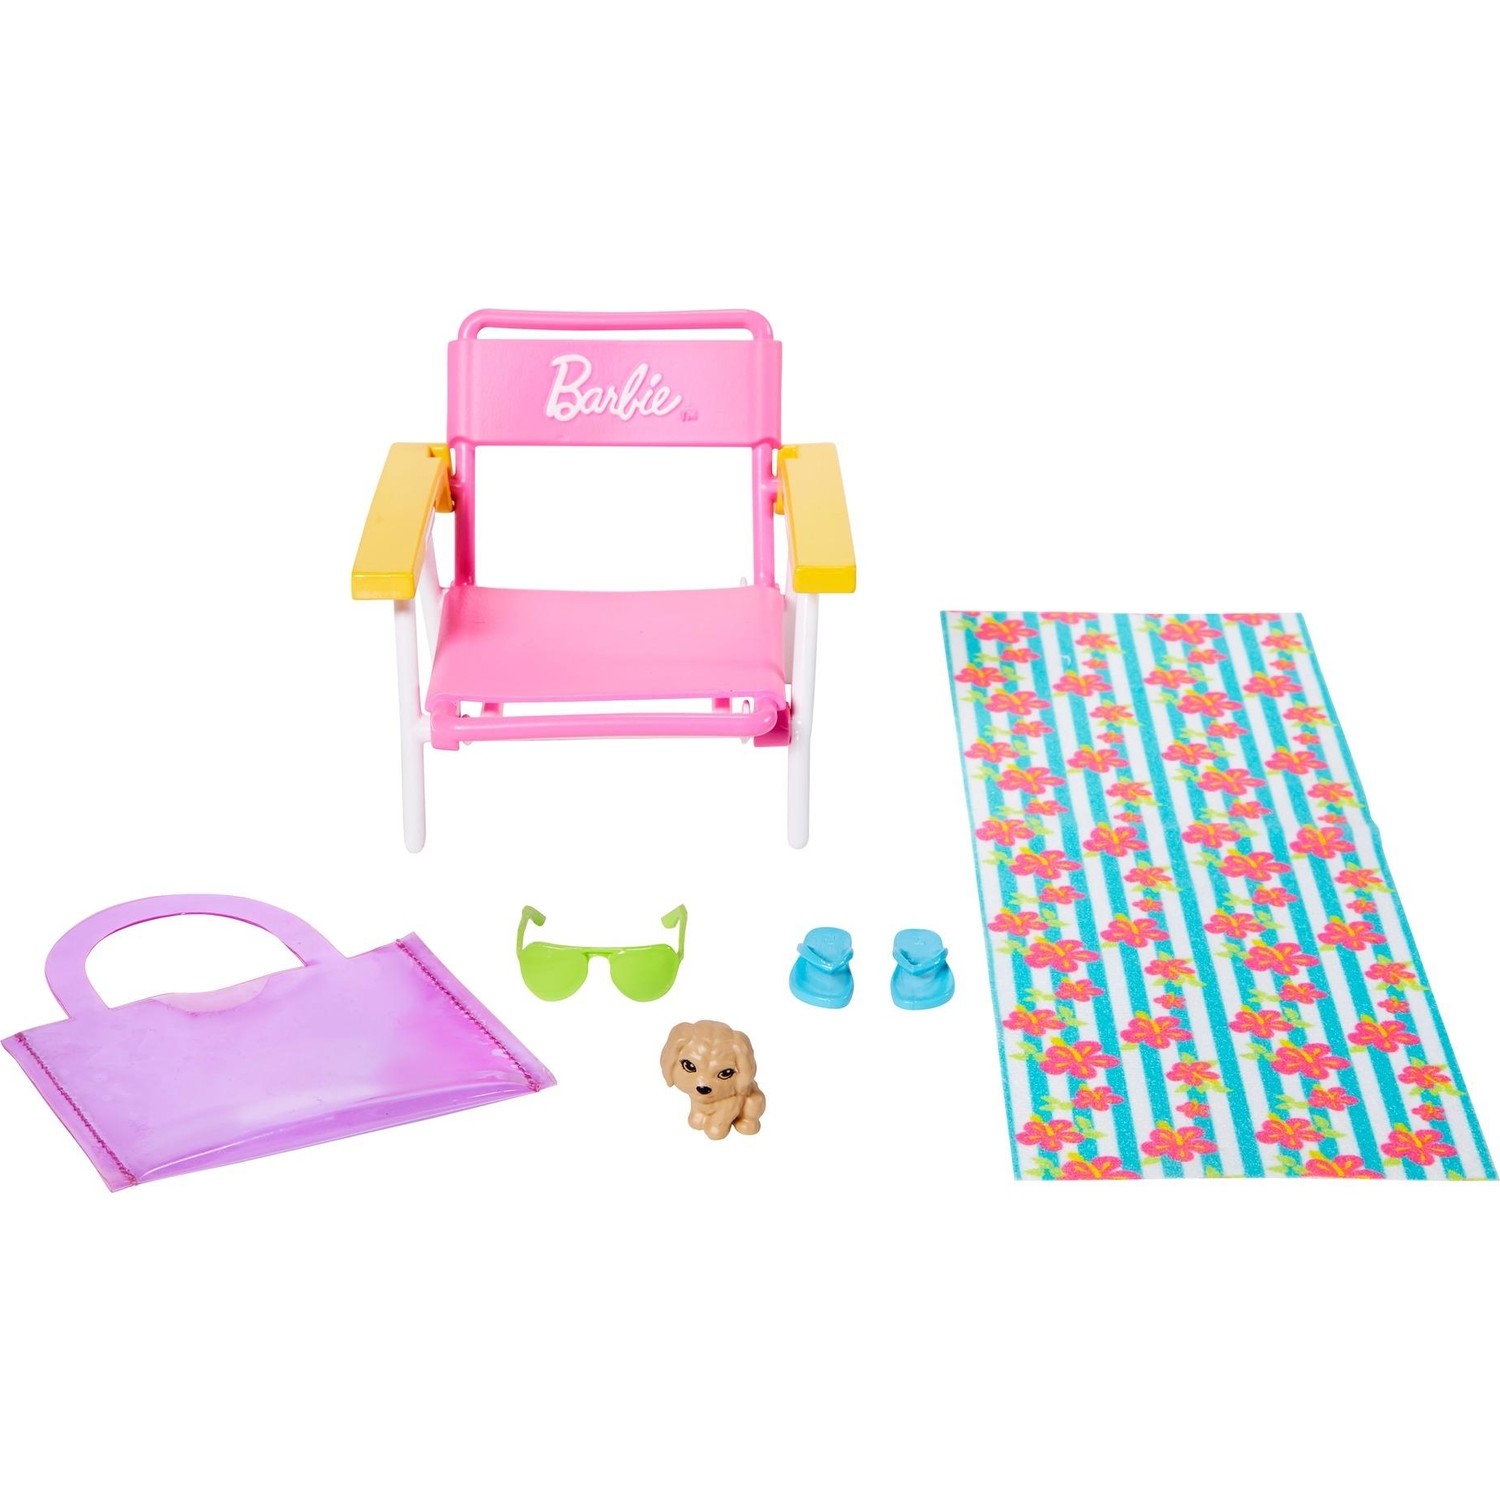 Игровой набор Barbie Home Accessory Packs GRG56 набор игровой barbie pets s2 dreamhouse